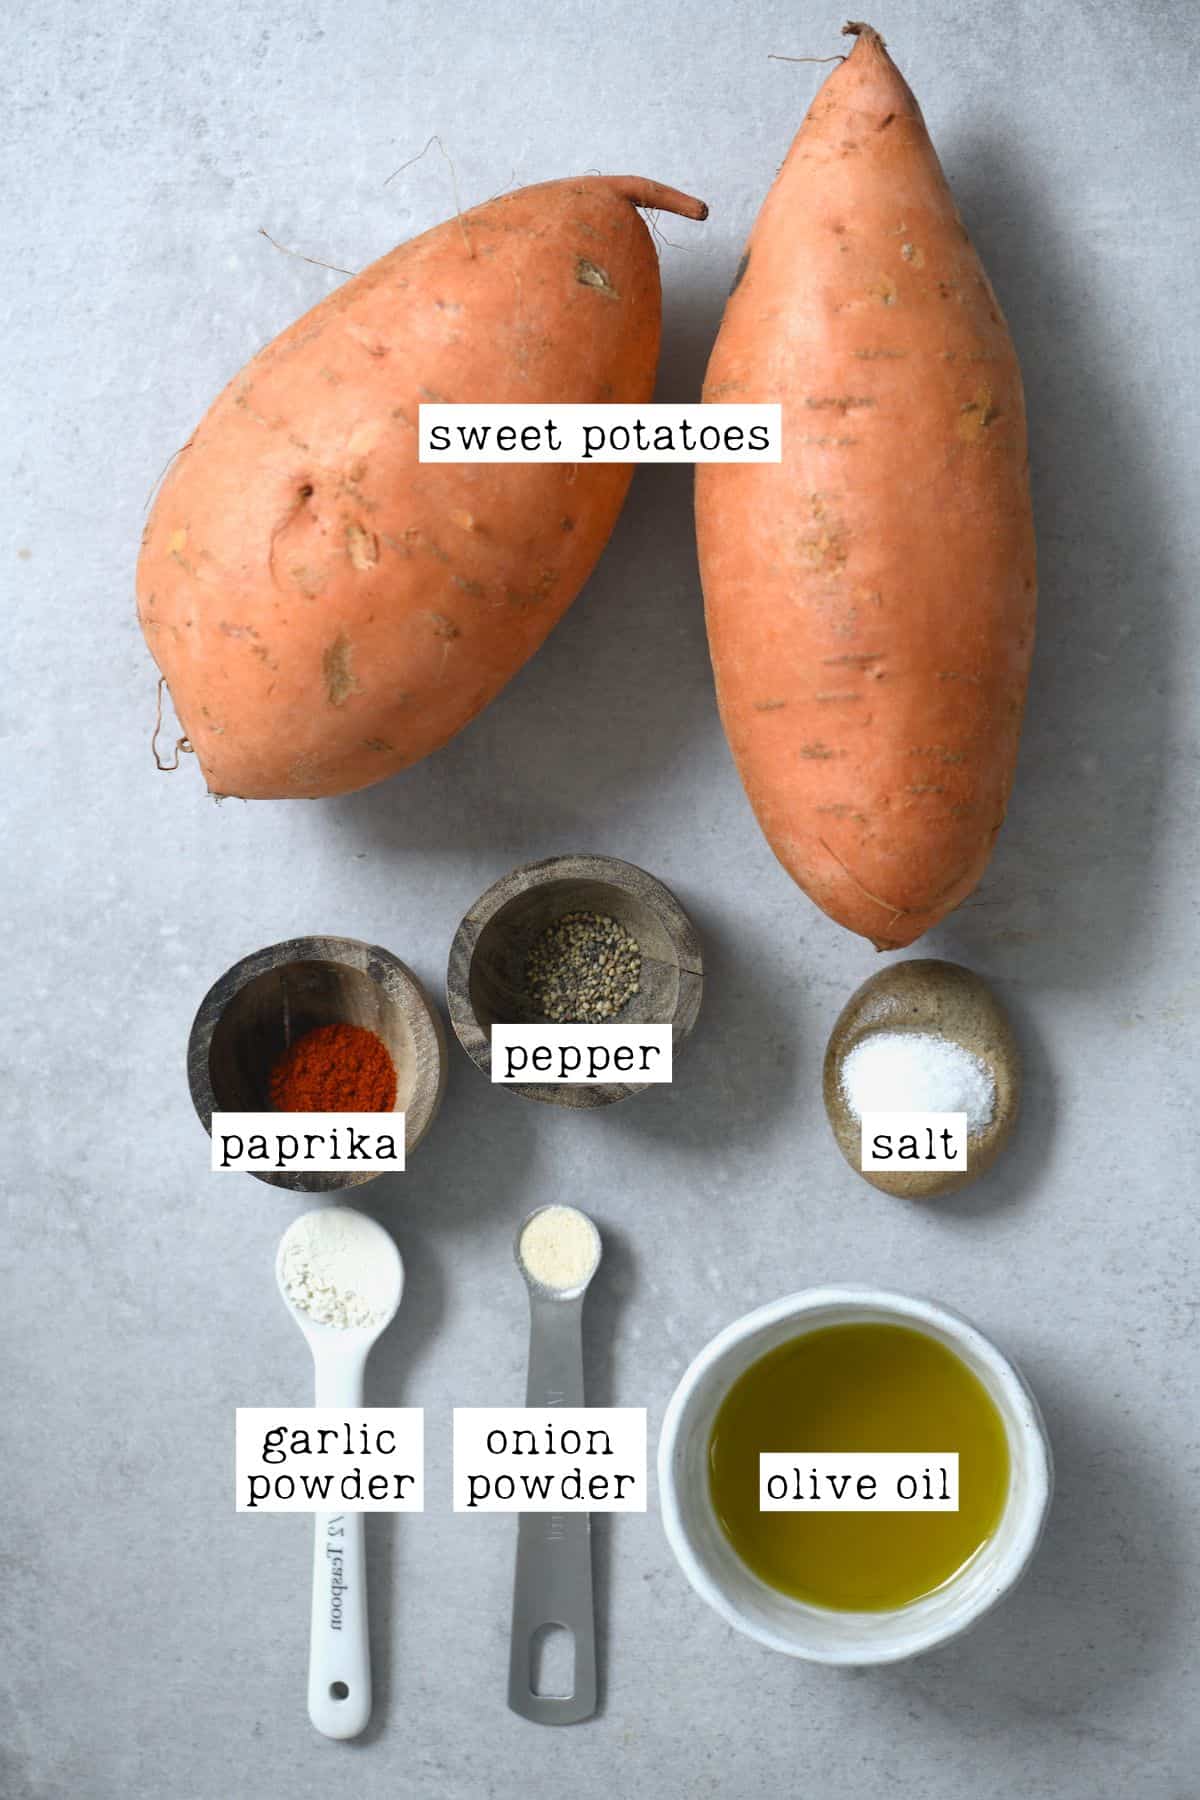 Ingredients for sweet potato fries